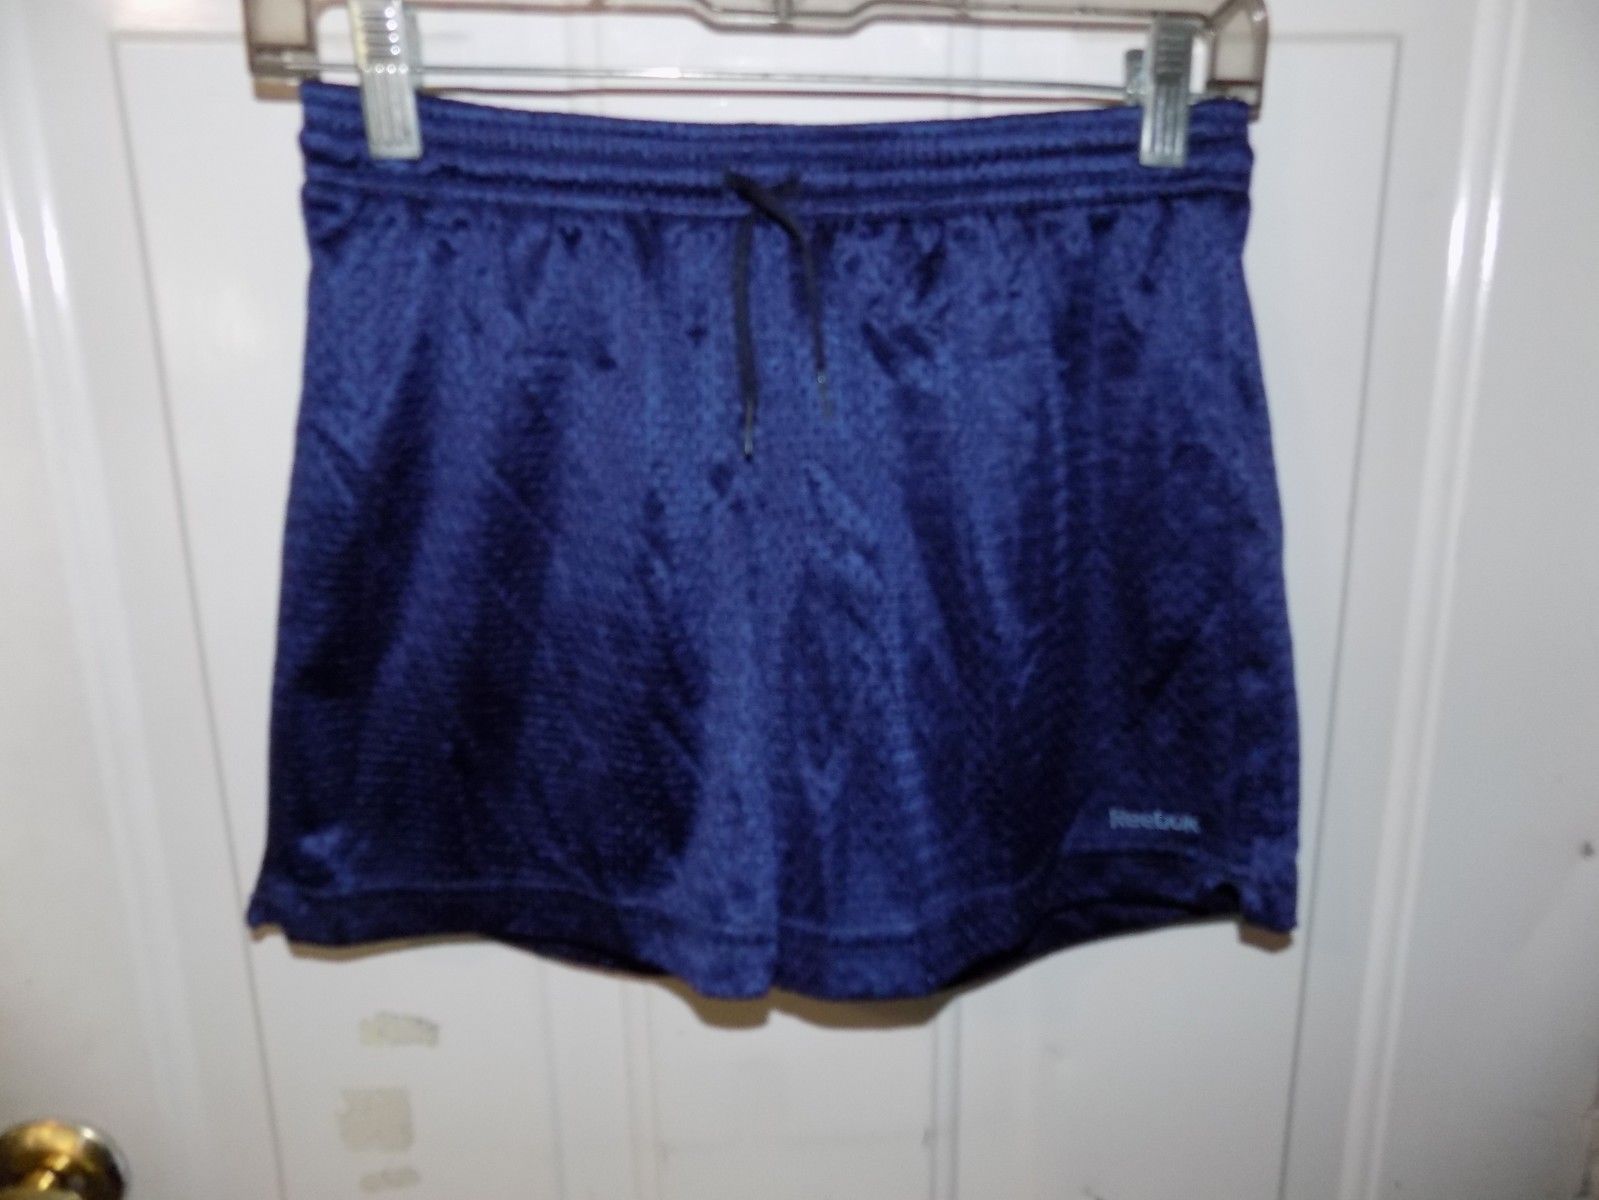 Reebok Navy Blue Mesh Shorts Size M Girl's EUC - $25.00